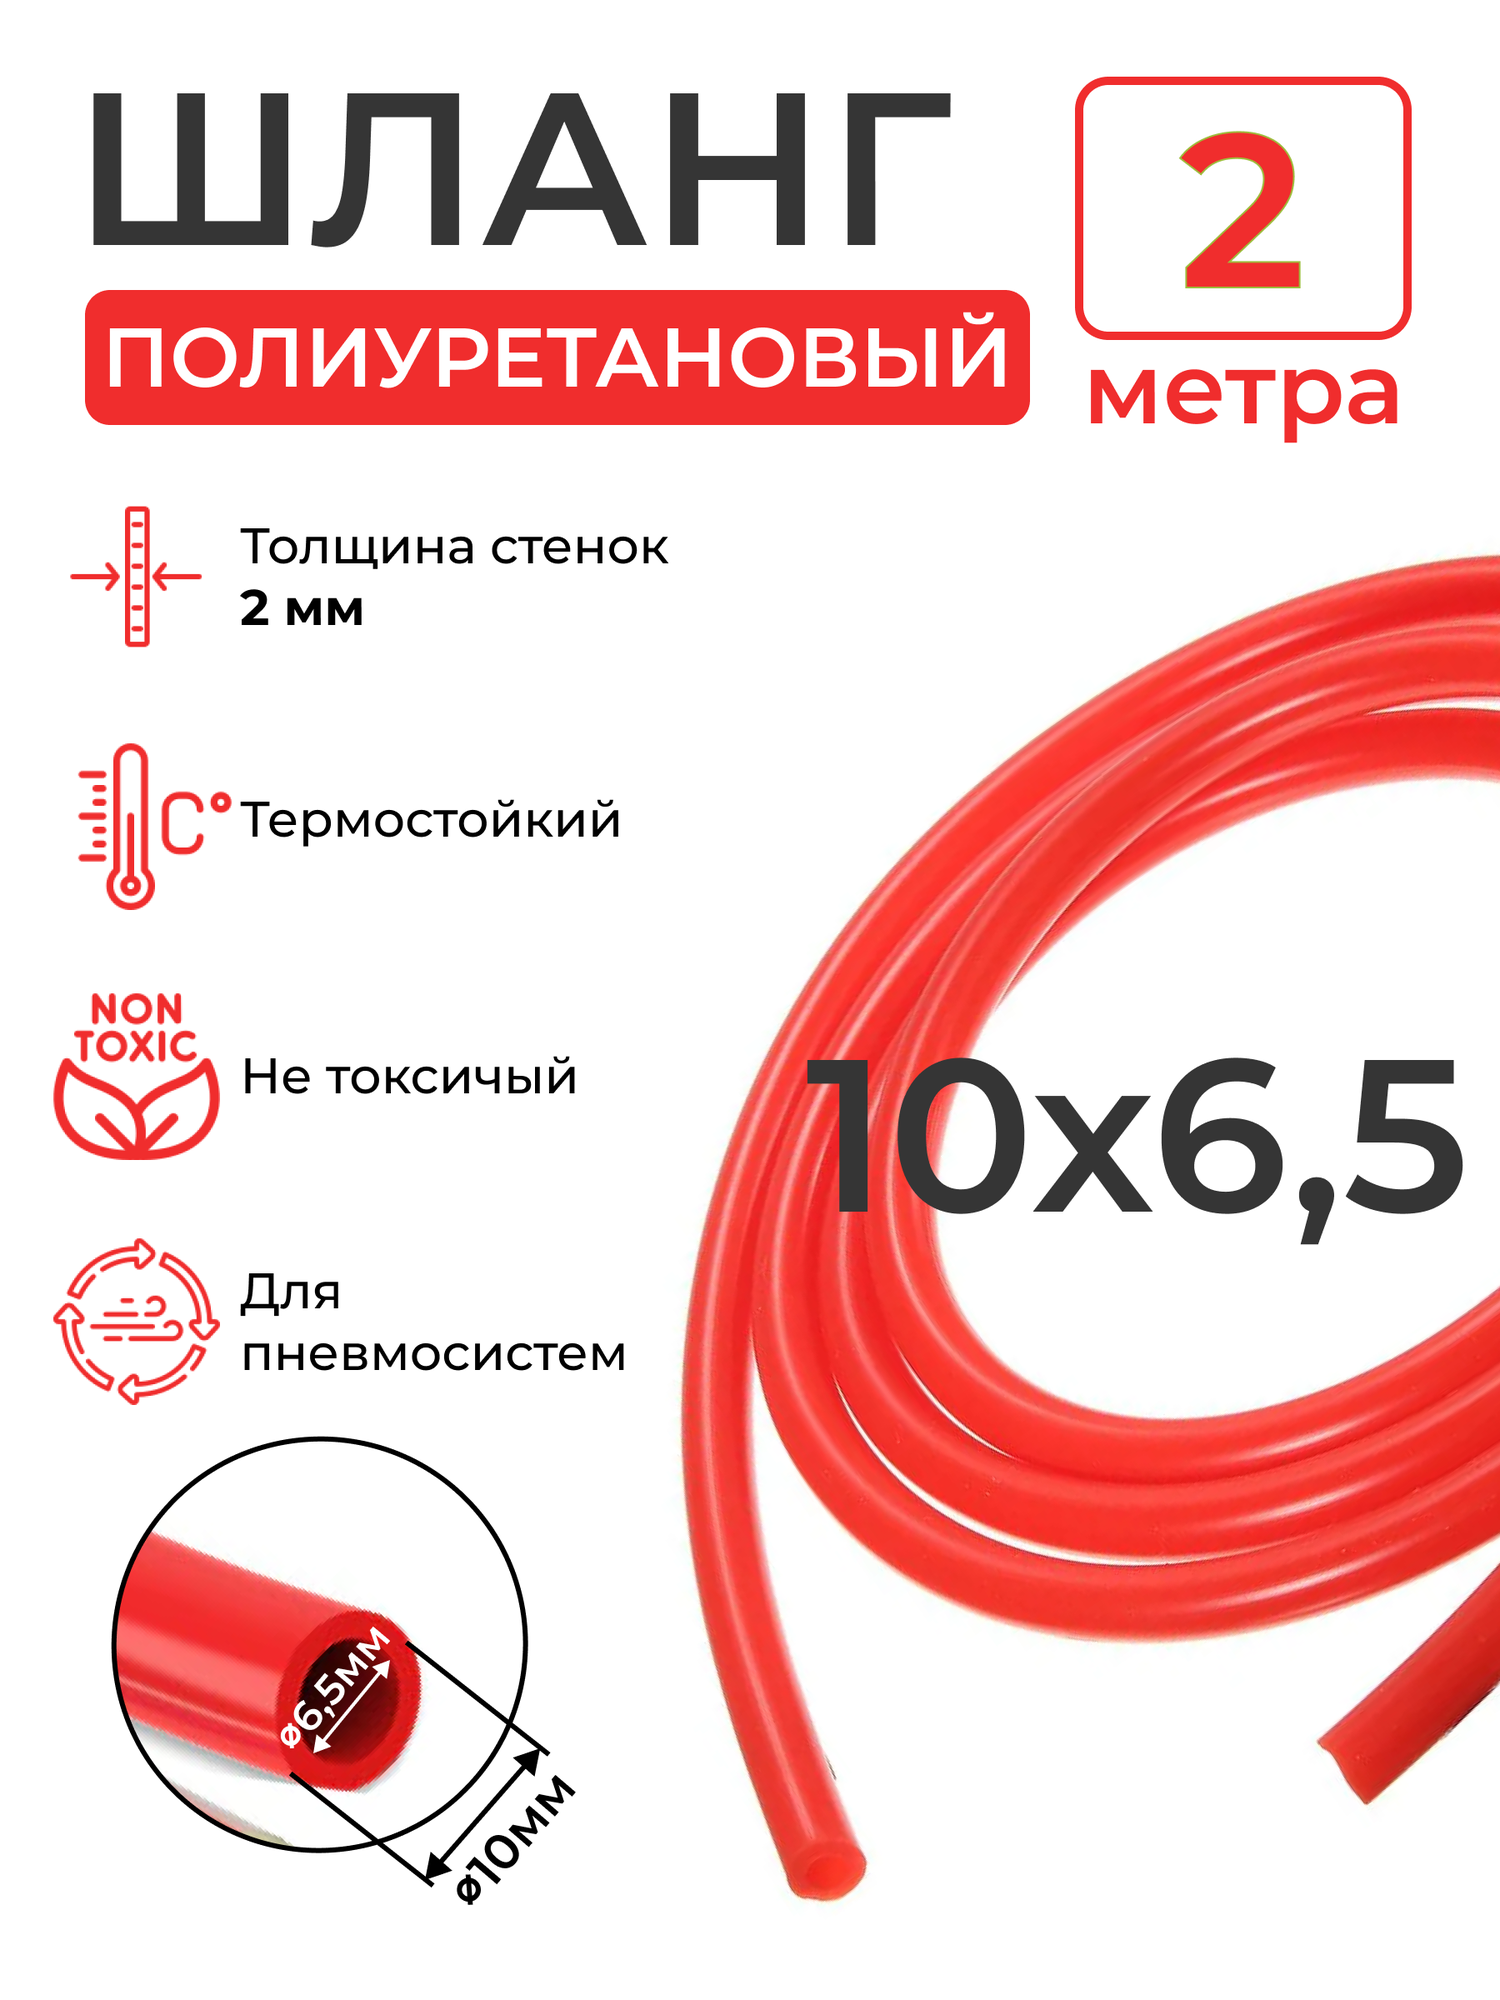 Пневмошланг красный (2 метра), внешний диаметр: 10мм; внутренний диаметр: 6,5 мм.